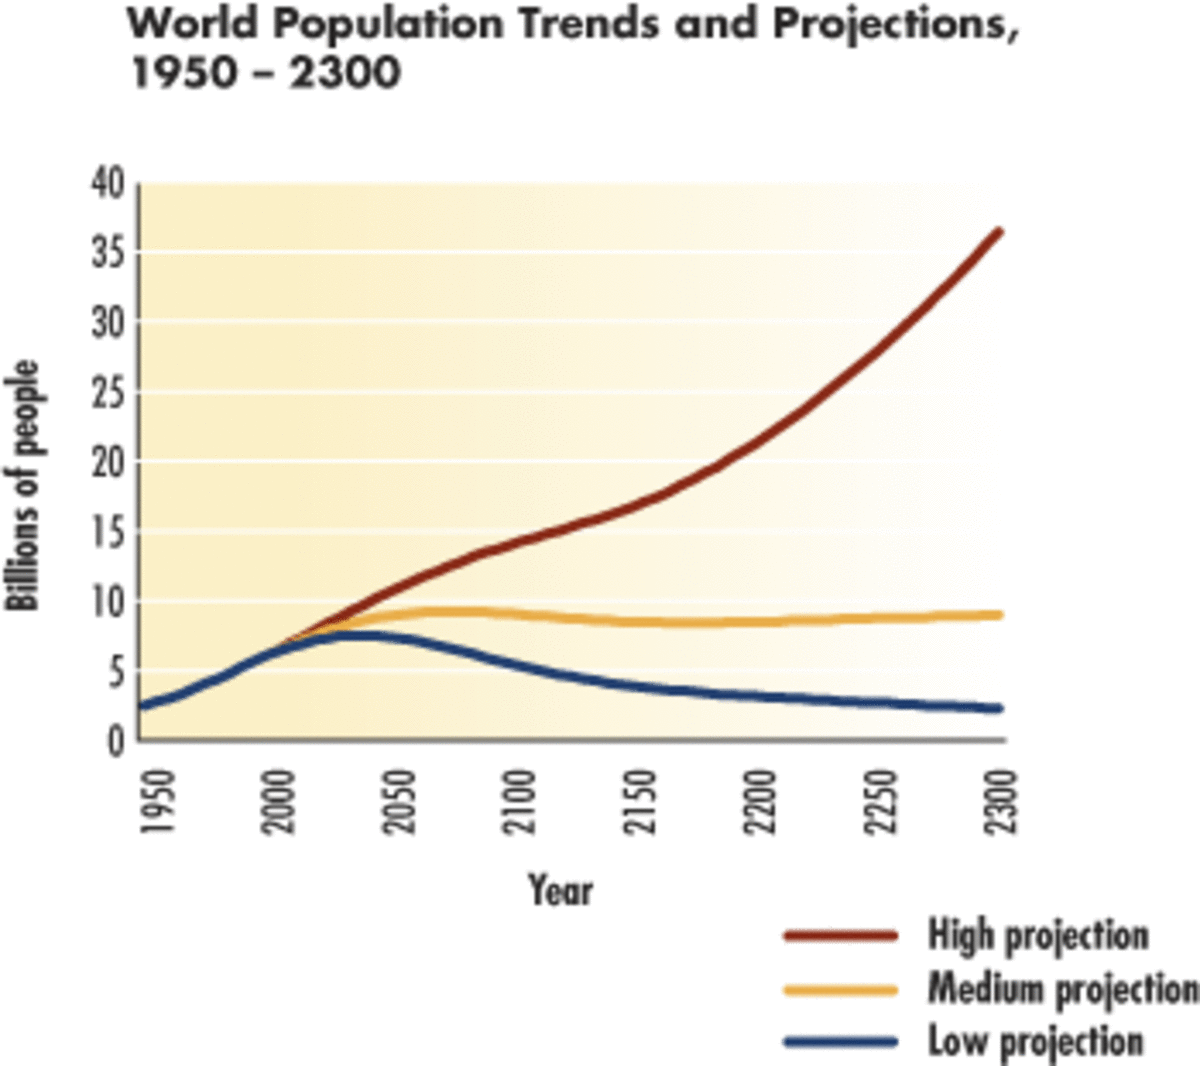 UN Population projection through 2300